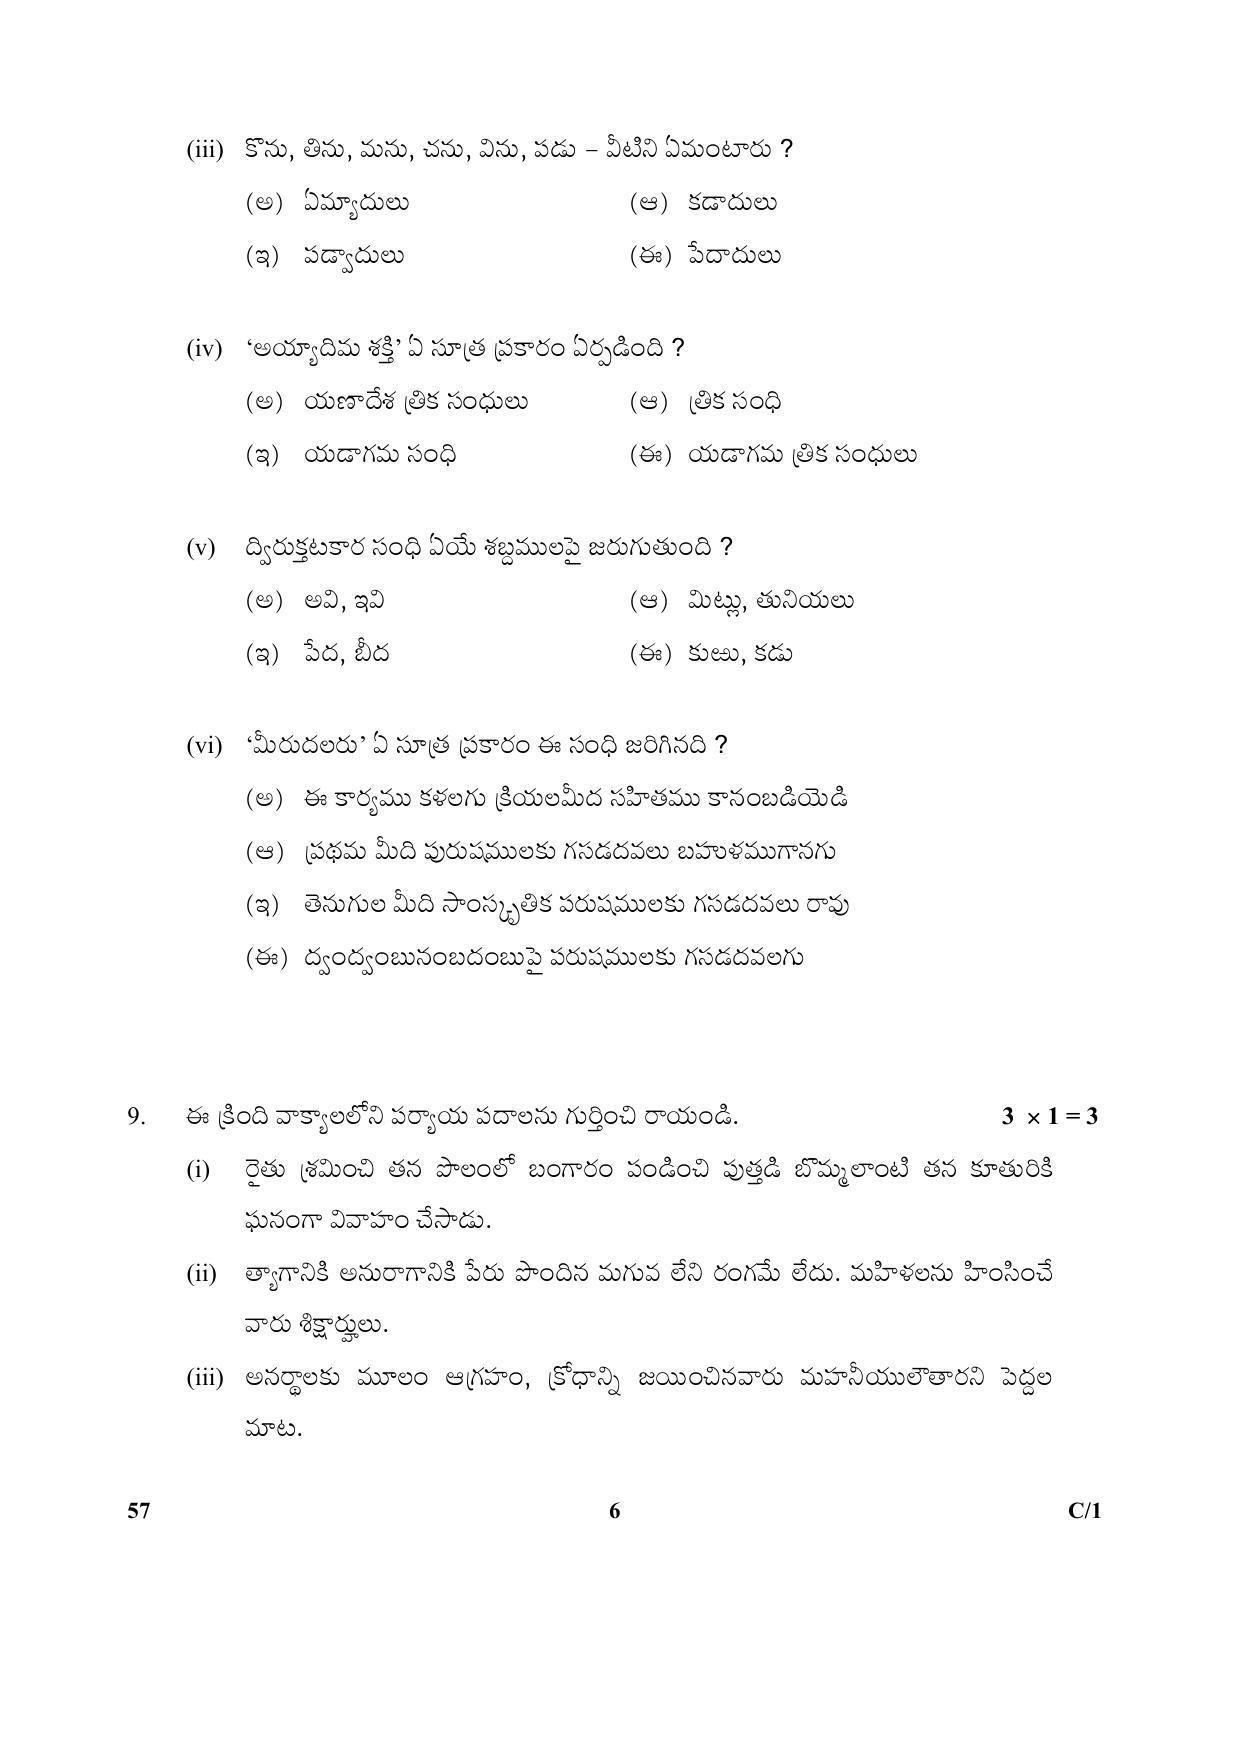 CBSE Class 10 57 (Telugu) 2018 Compartment Question Paper - Page 6